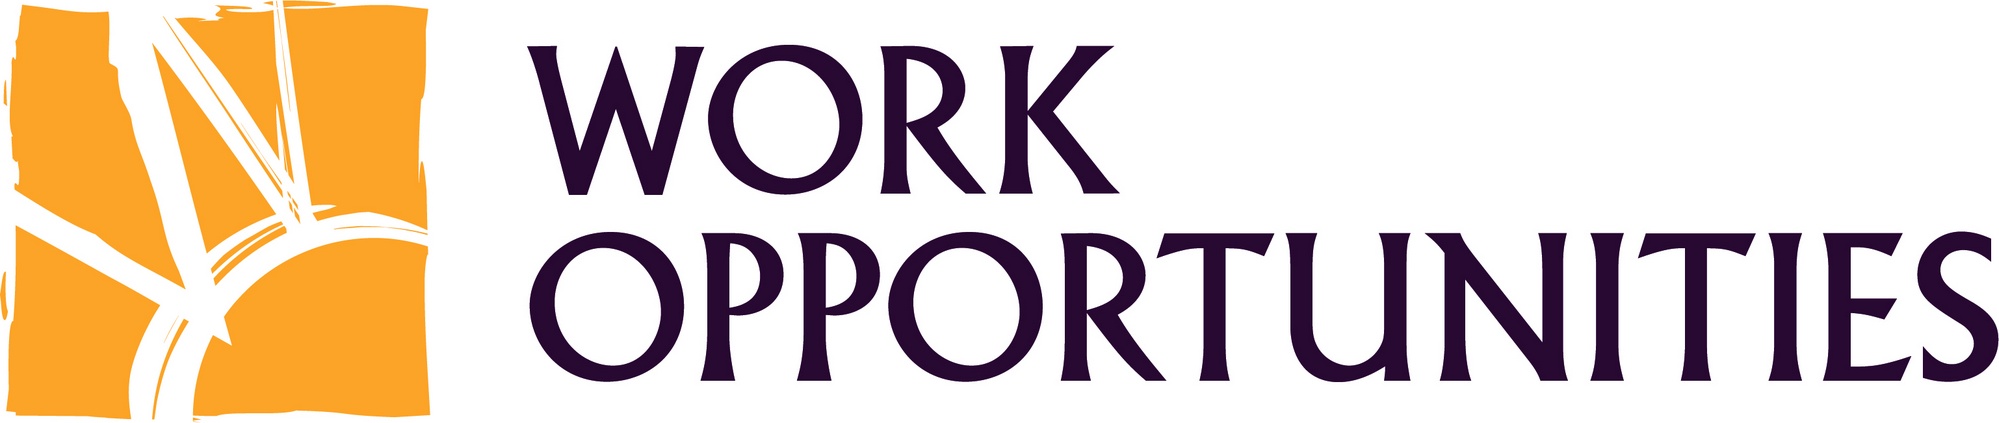 Work Opportunties logo